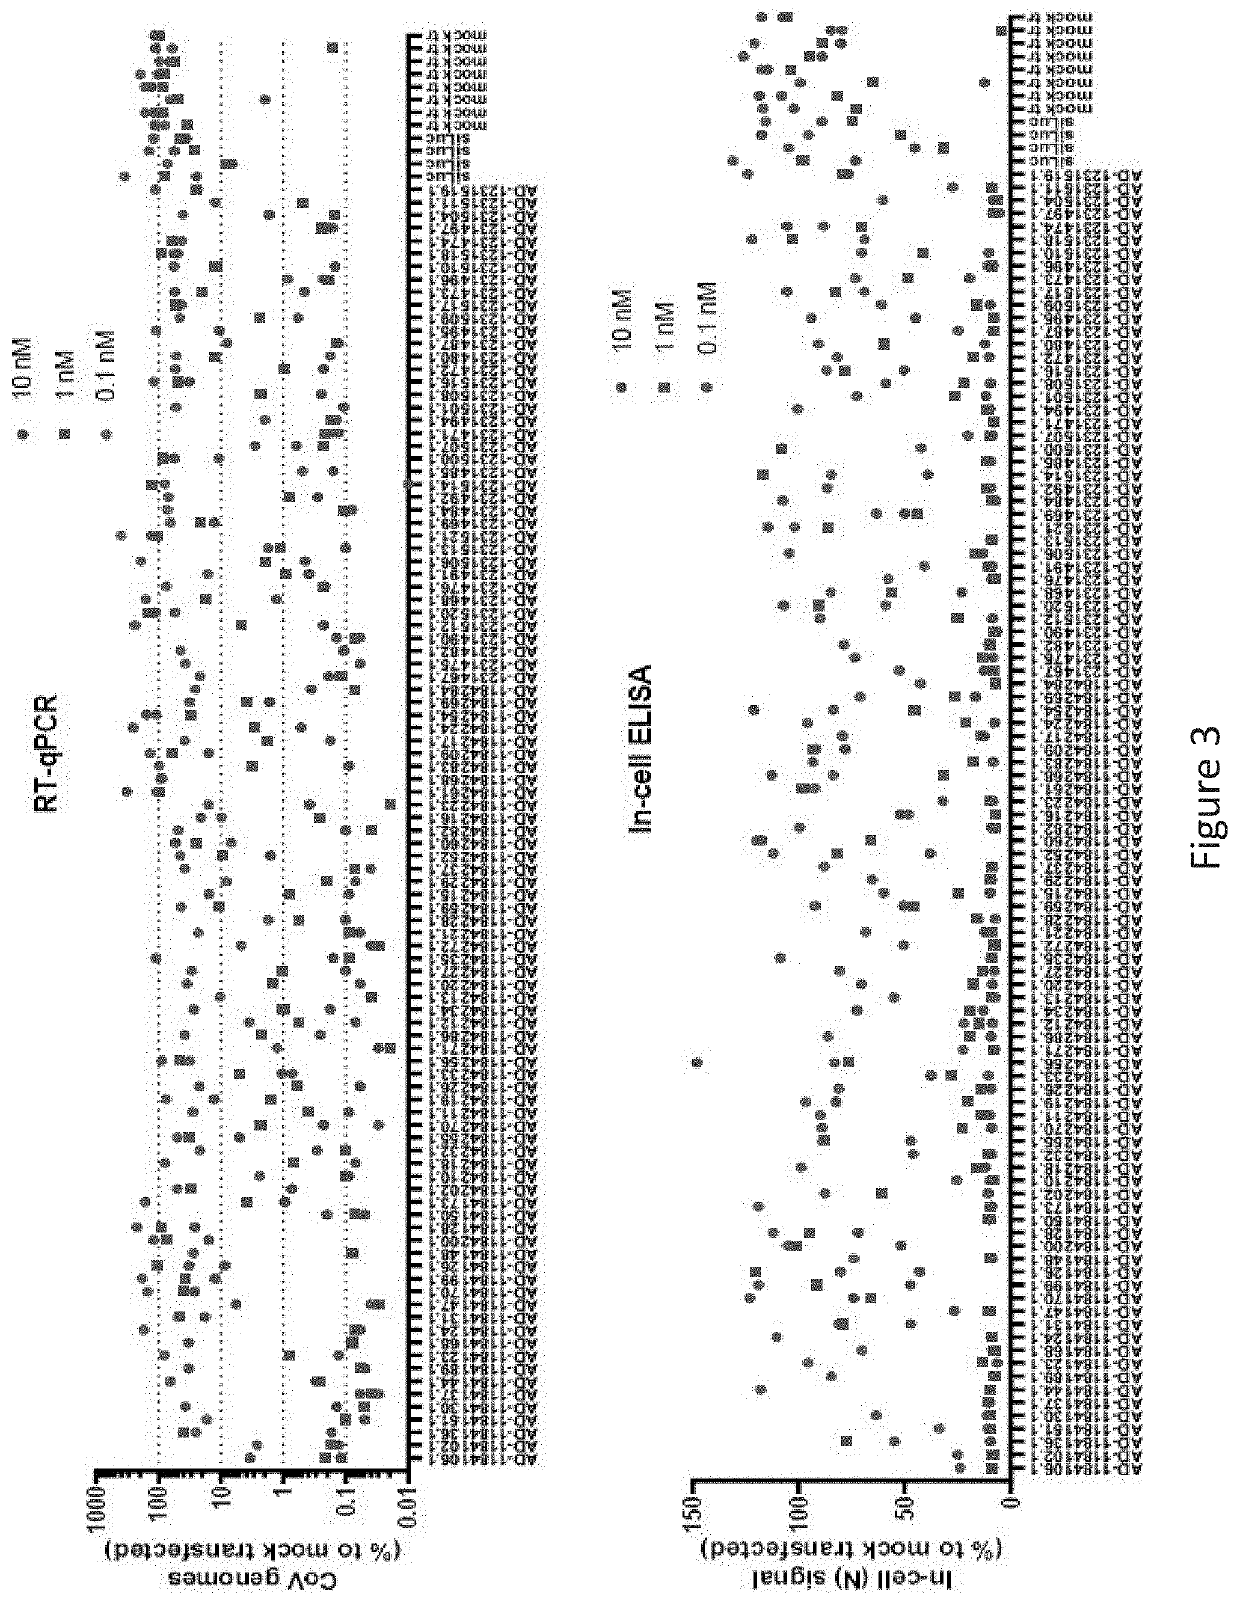 Coronavirus irna compositions and methods of use thereof